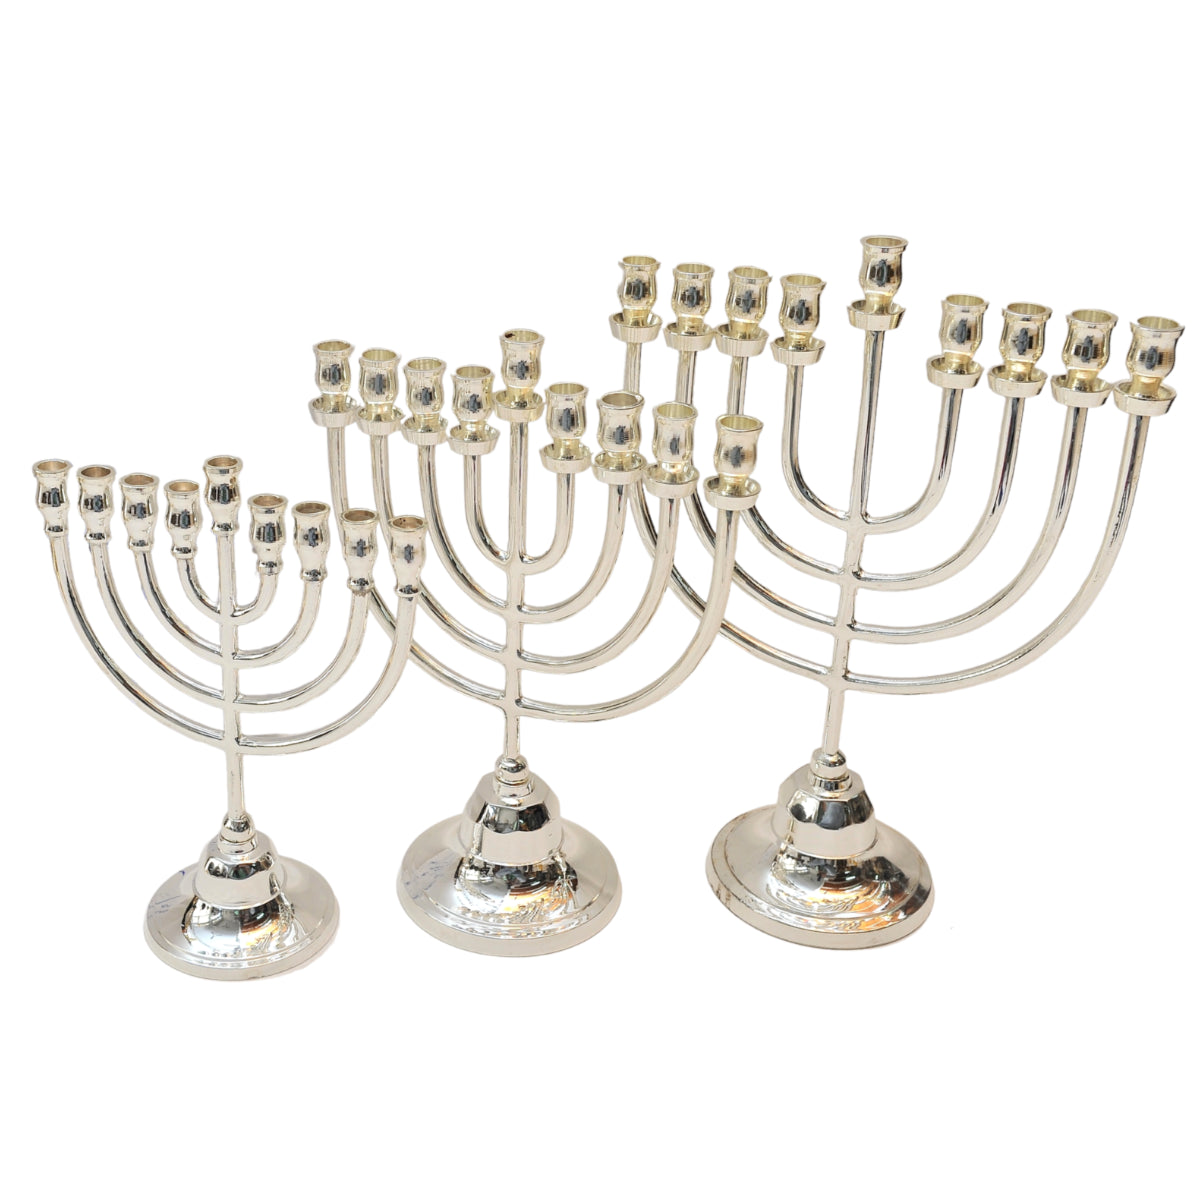 Temple Menorah Hanukkiah Silver Plated Candle Holder from Jerusalem